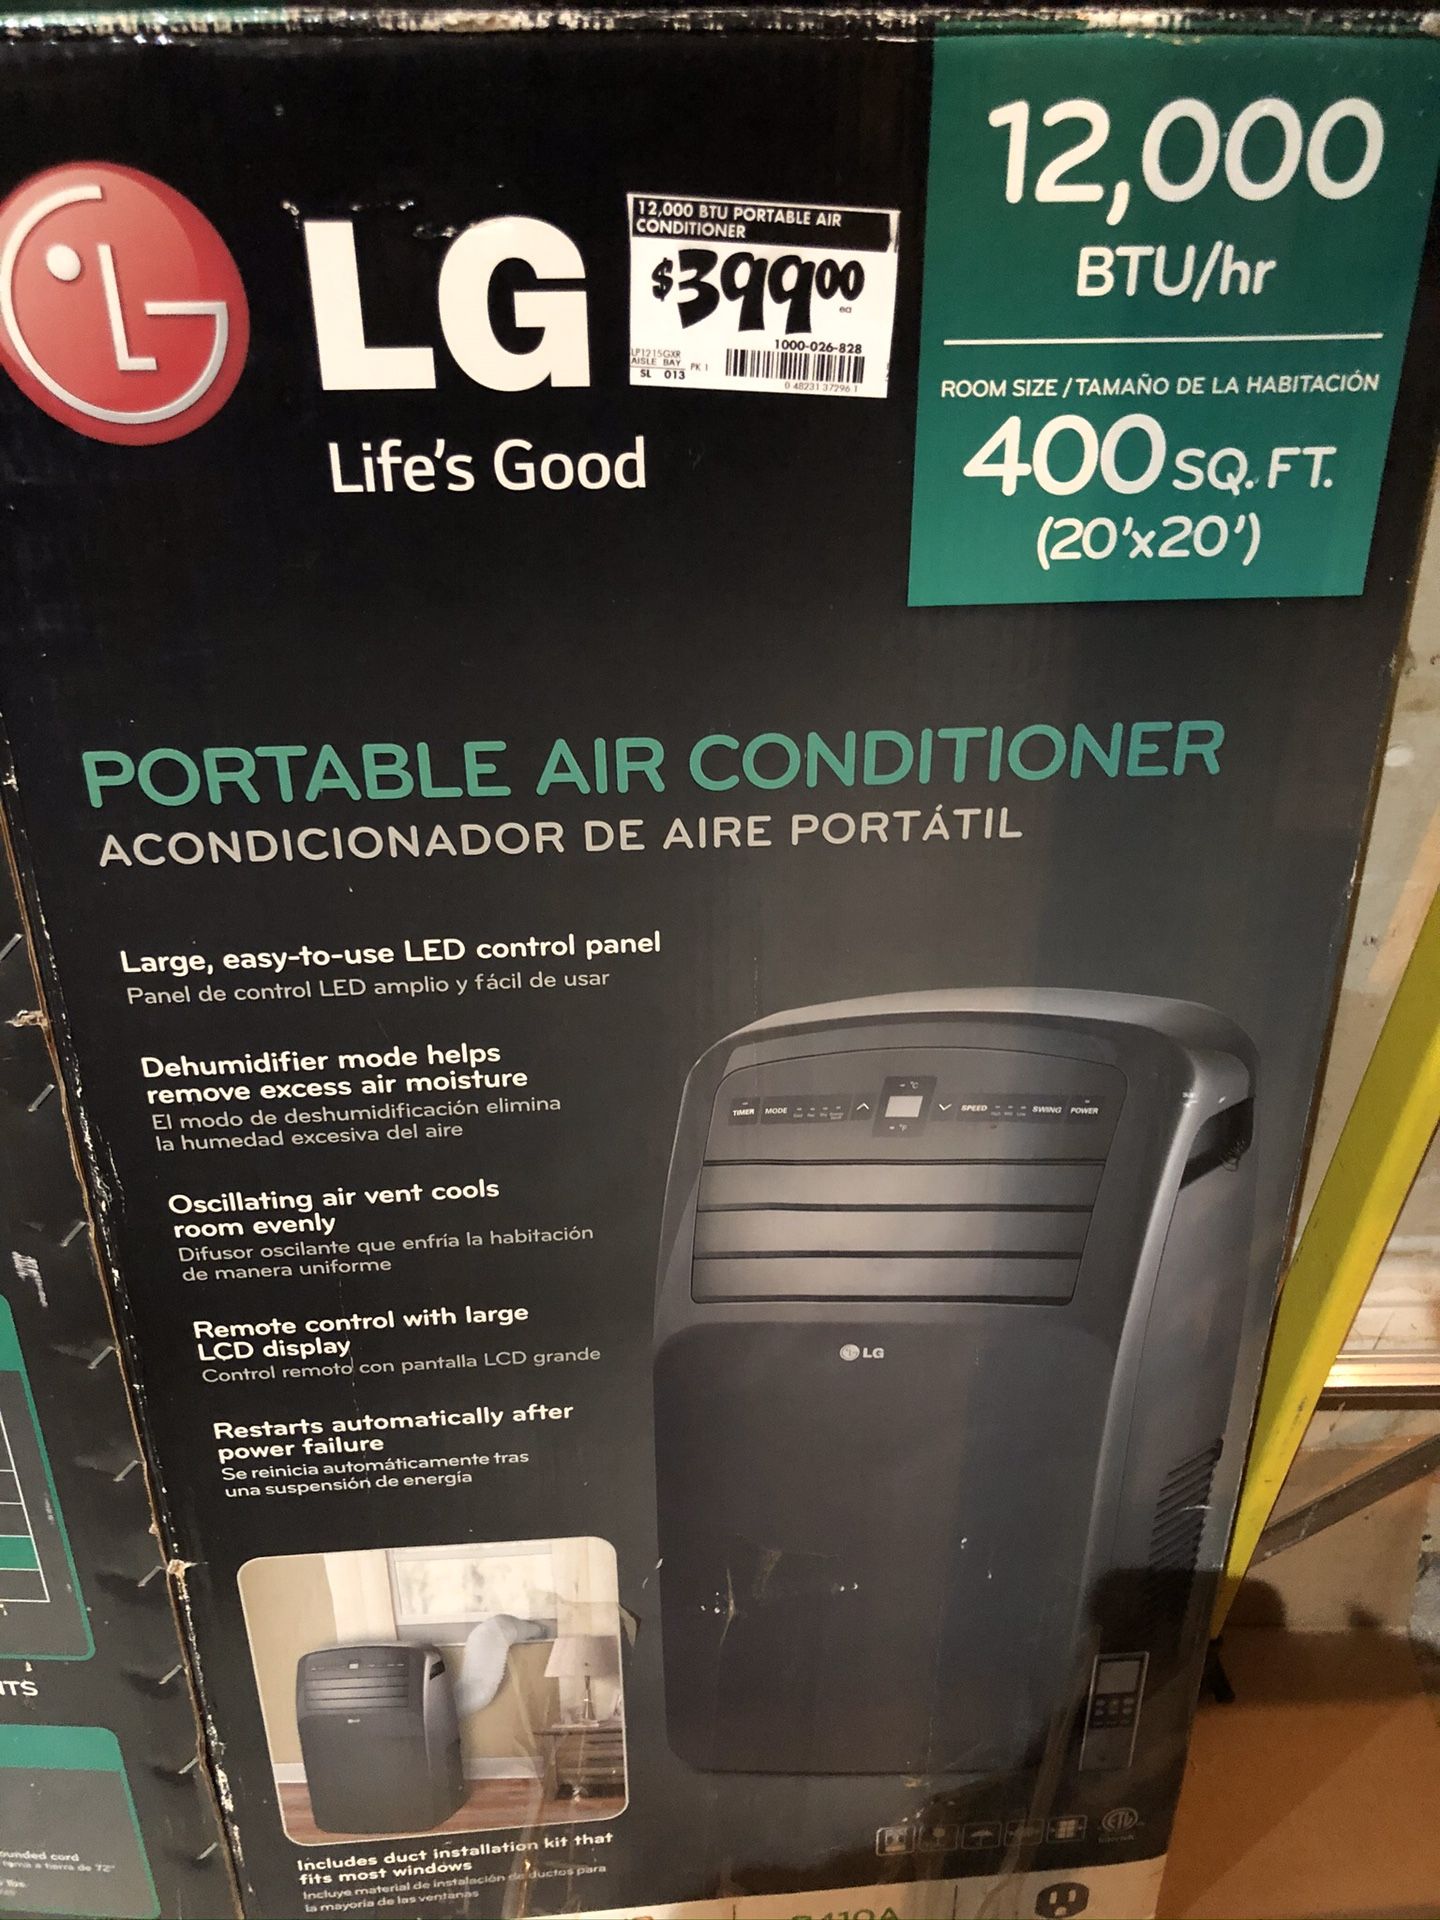 LG Portable Air Conditioner 12,000 BTU/hr